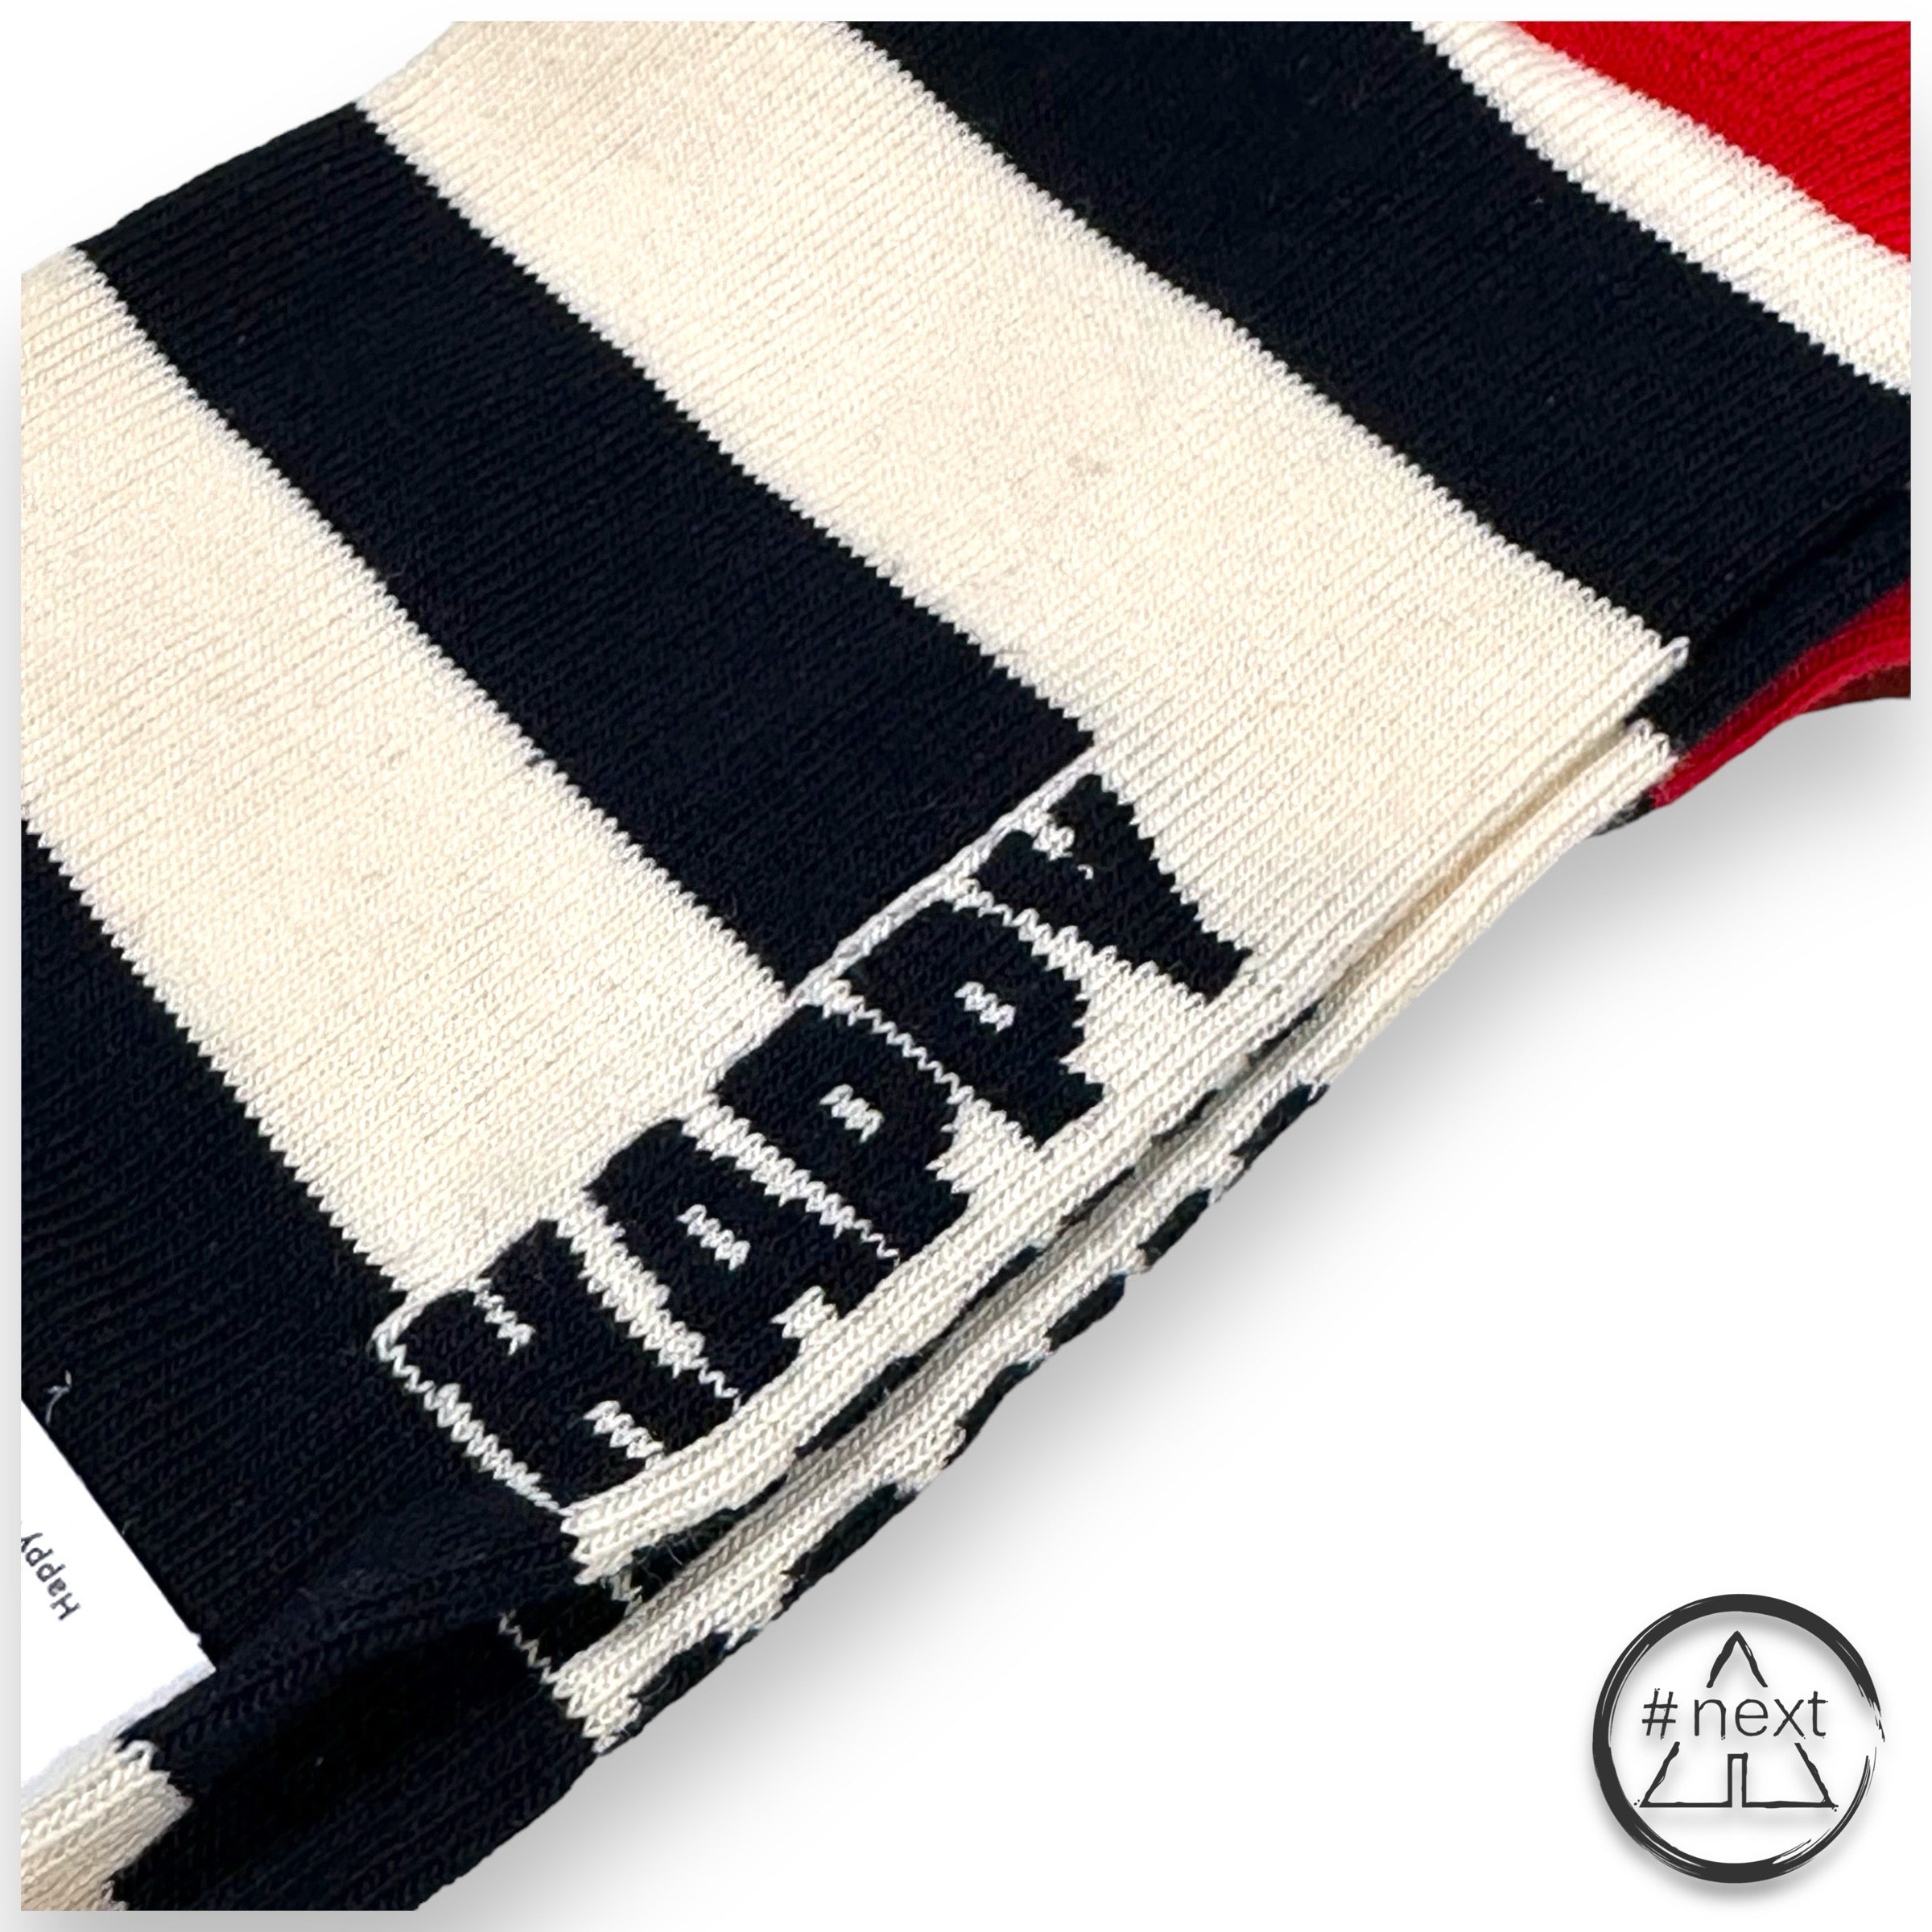 Happy Socks - Calza - Crew - Stripe Sock - Blue, white, red. - ANDY #NEXT